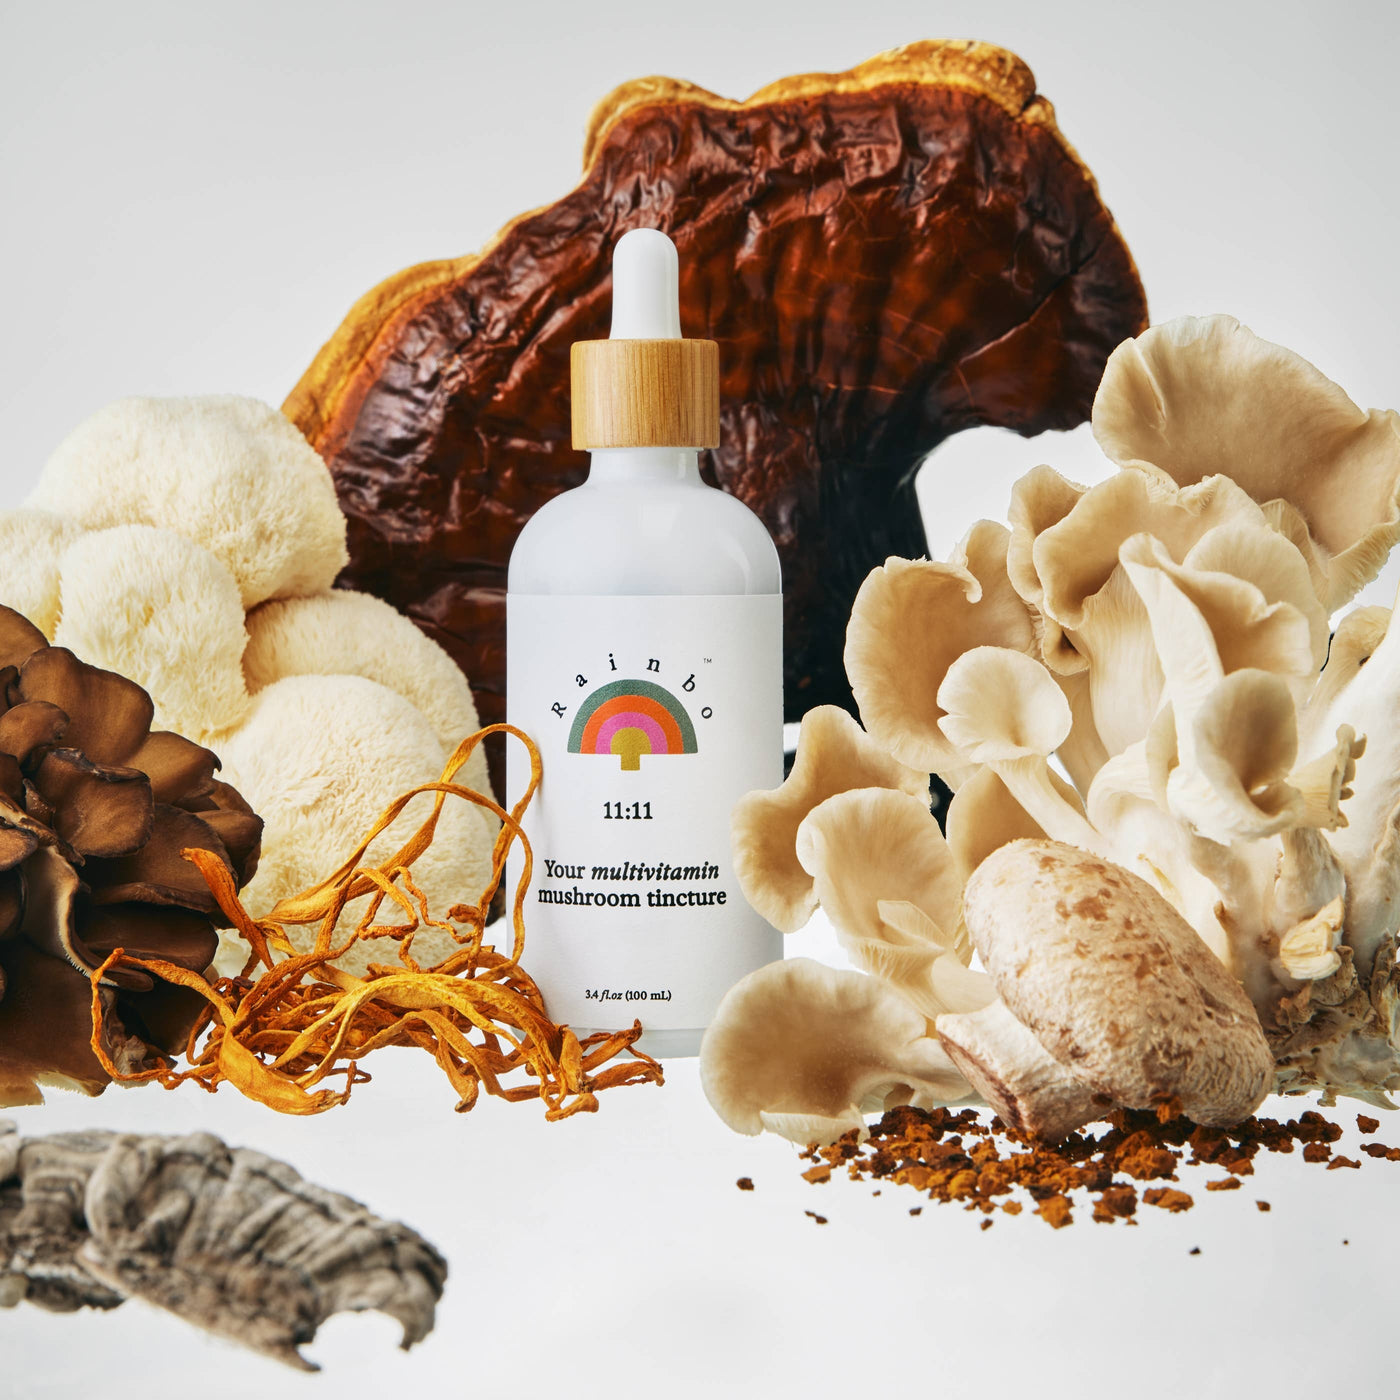 Rainbo Canada | 11:11 Super Multi-Mushroom Tincture, The Local Space, Local Canadian Brands